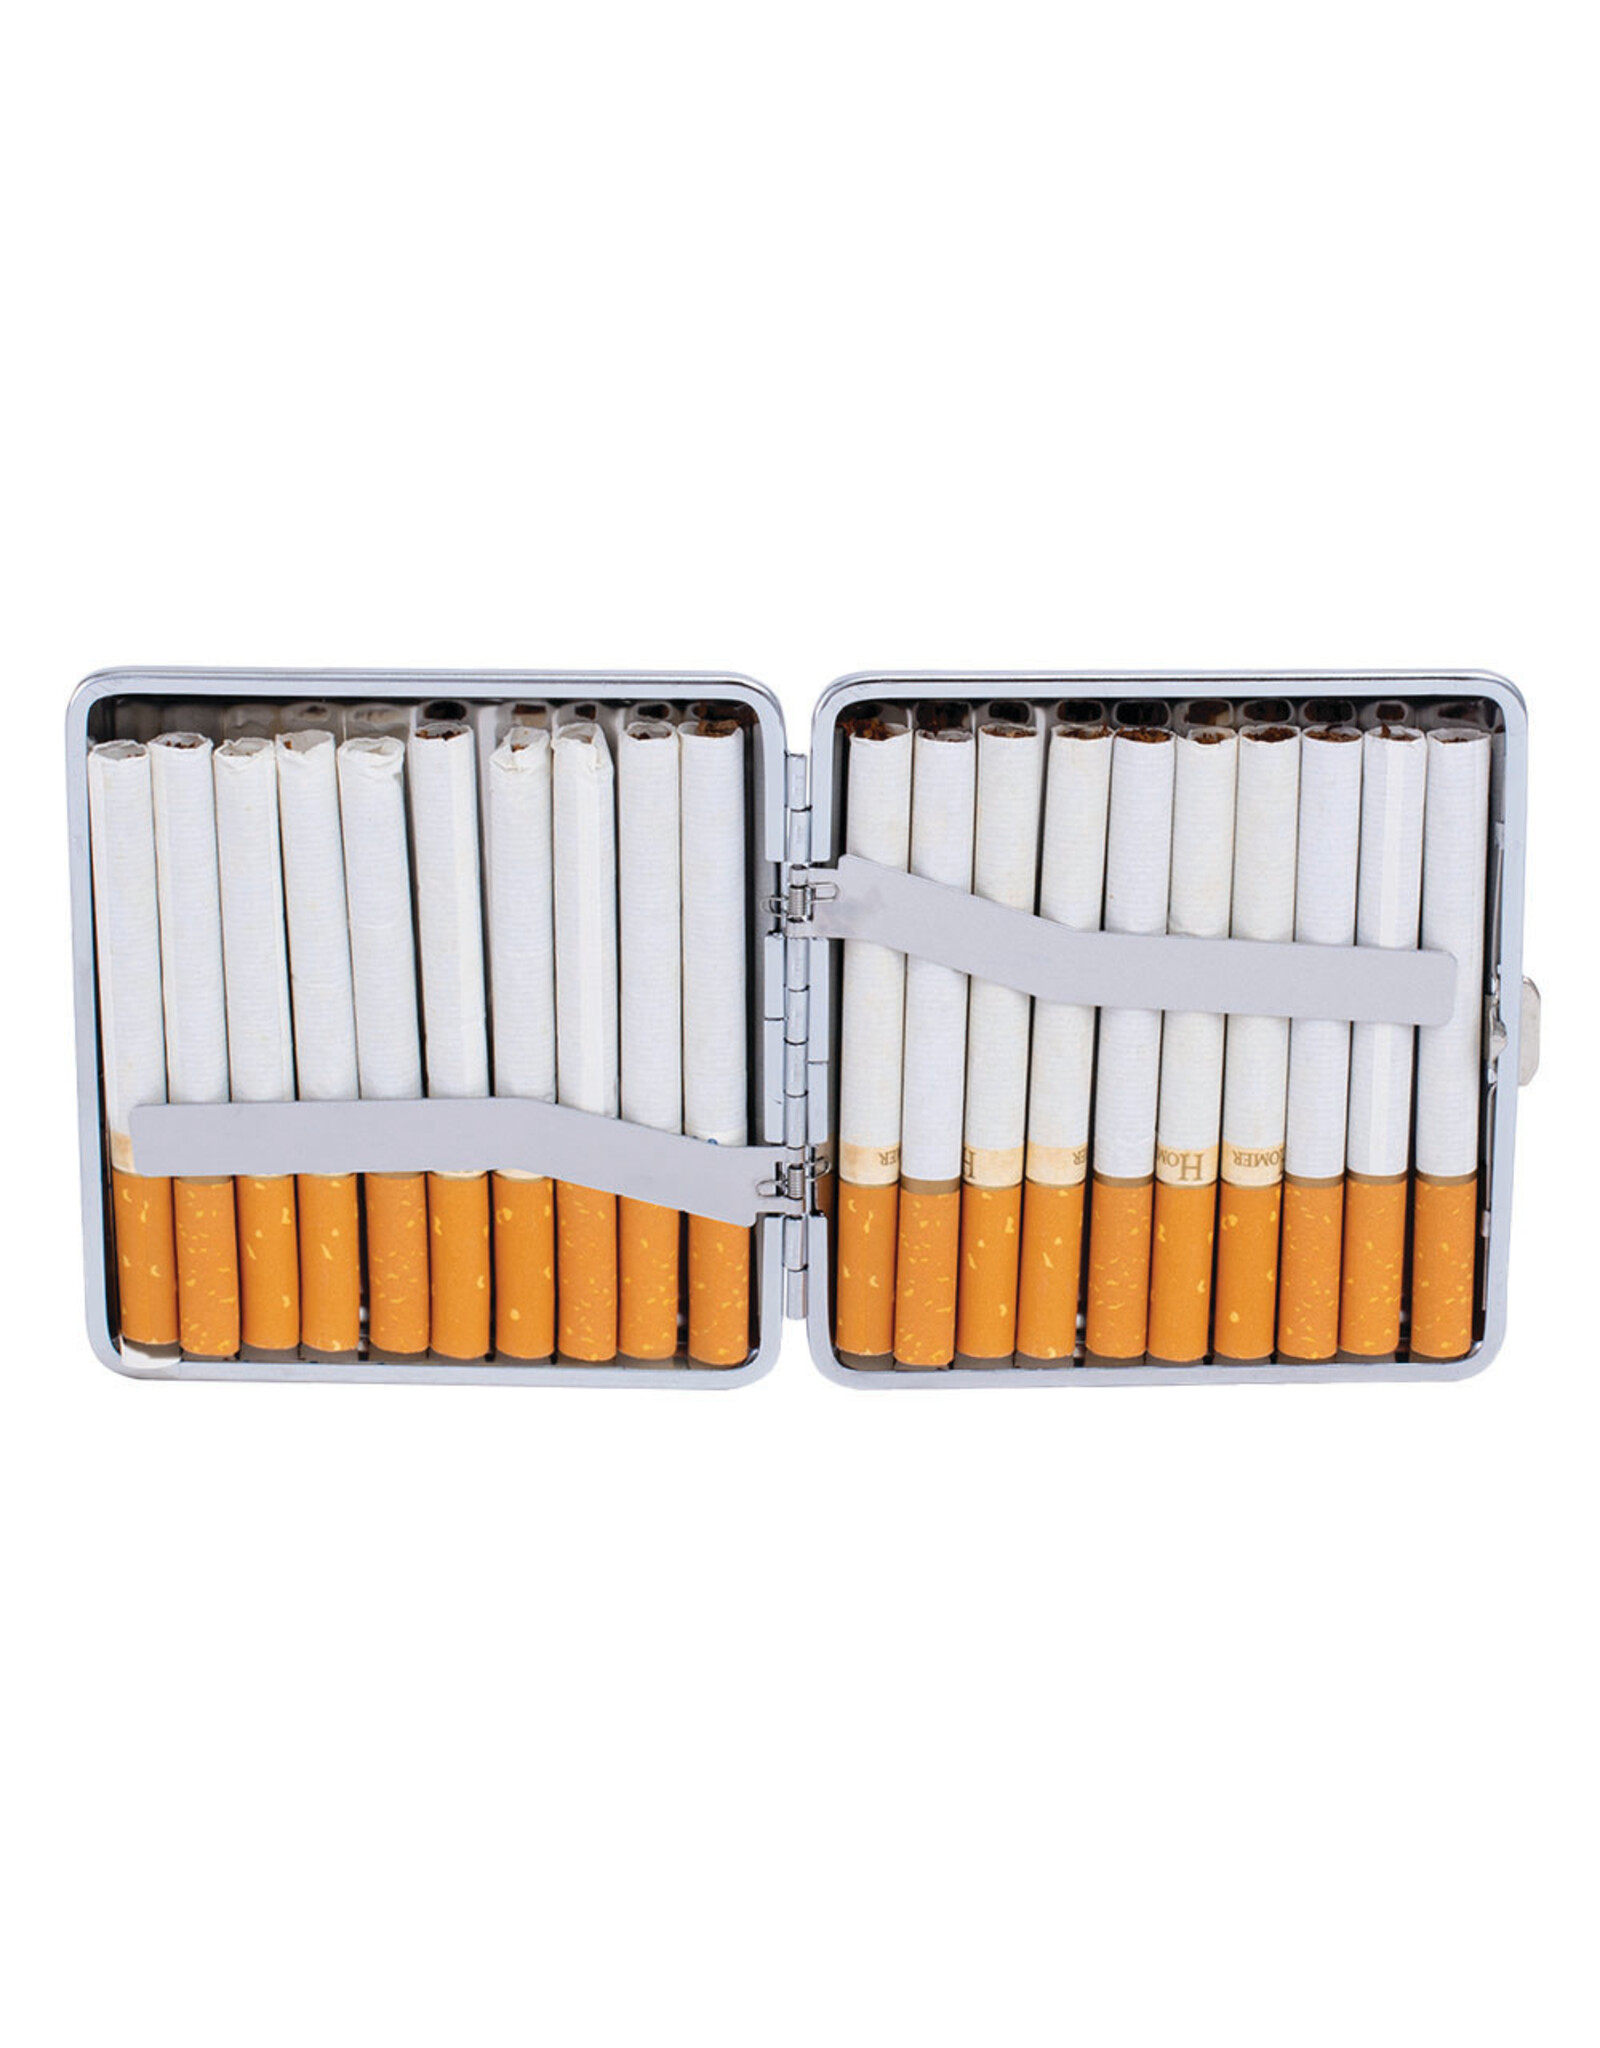 Fujima Metal Finish Double Sided Cigarette Case - King Size